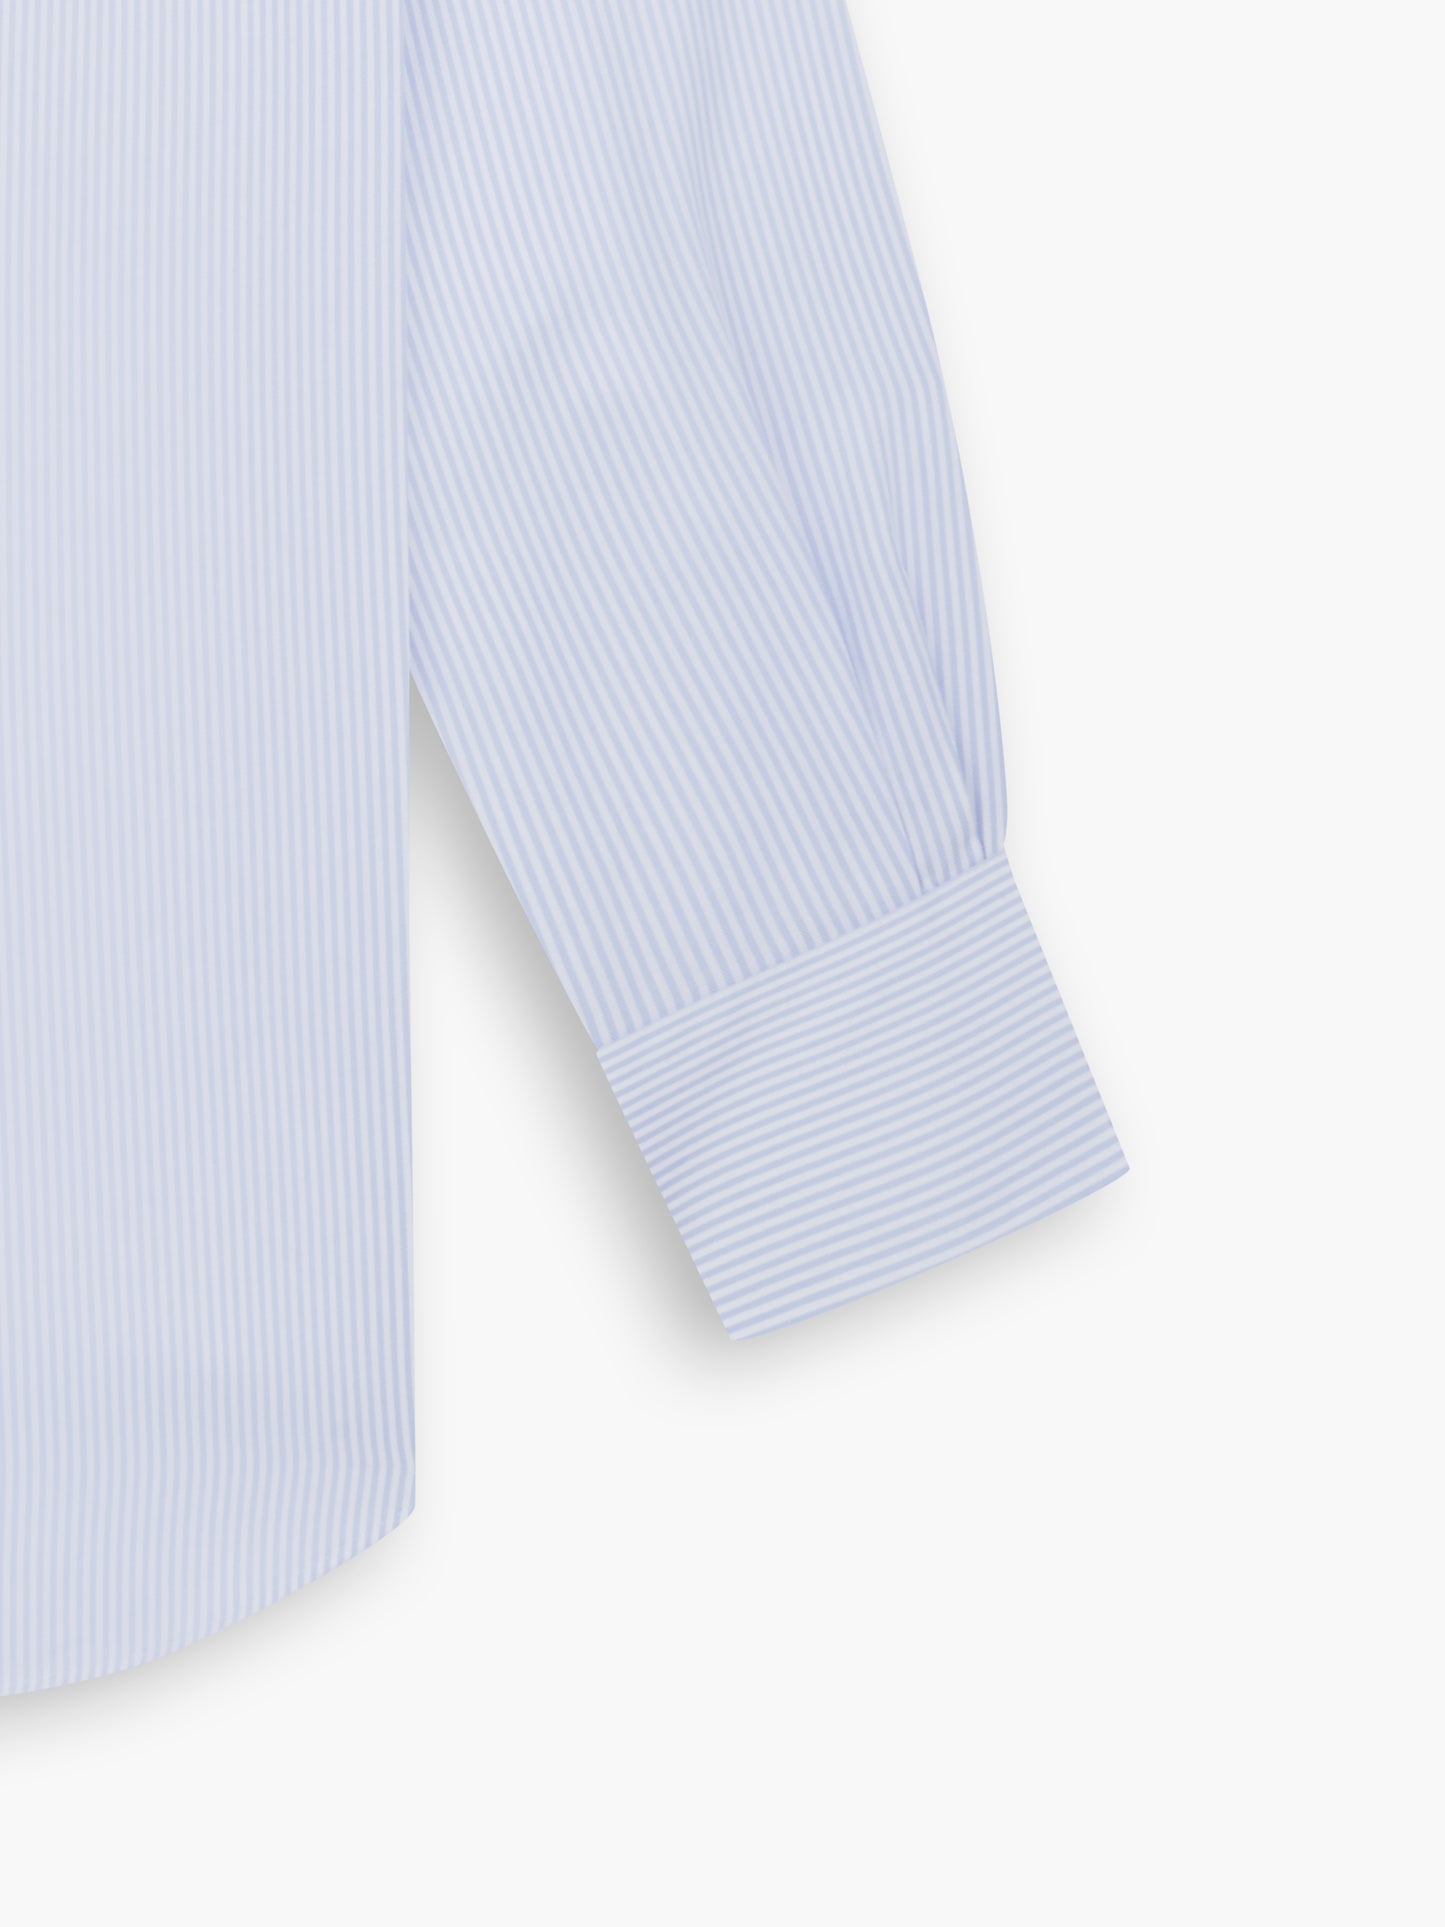 Non-Iron Light Blue Bengal Stripe Twill Slim Fit Single Cuff Cutaway Collar Shirt